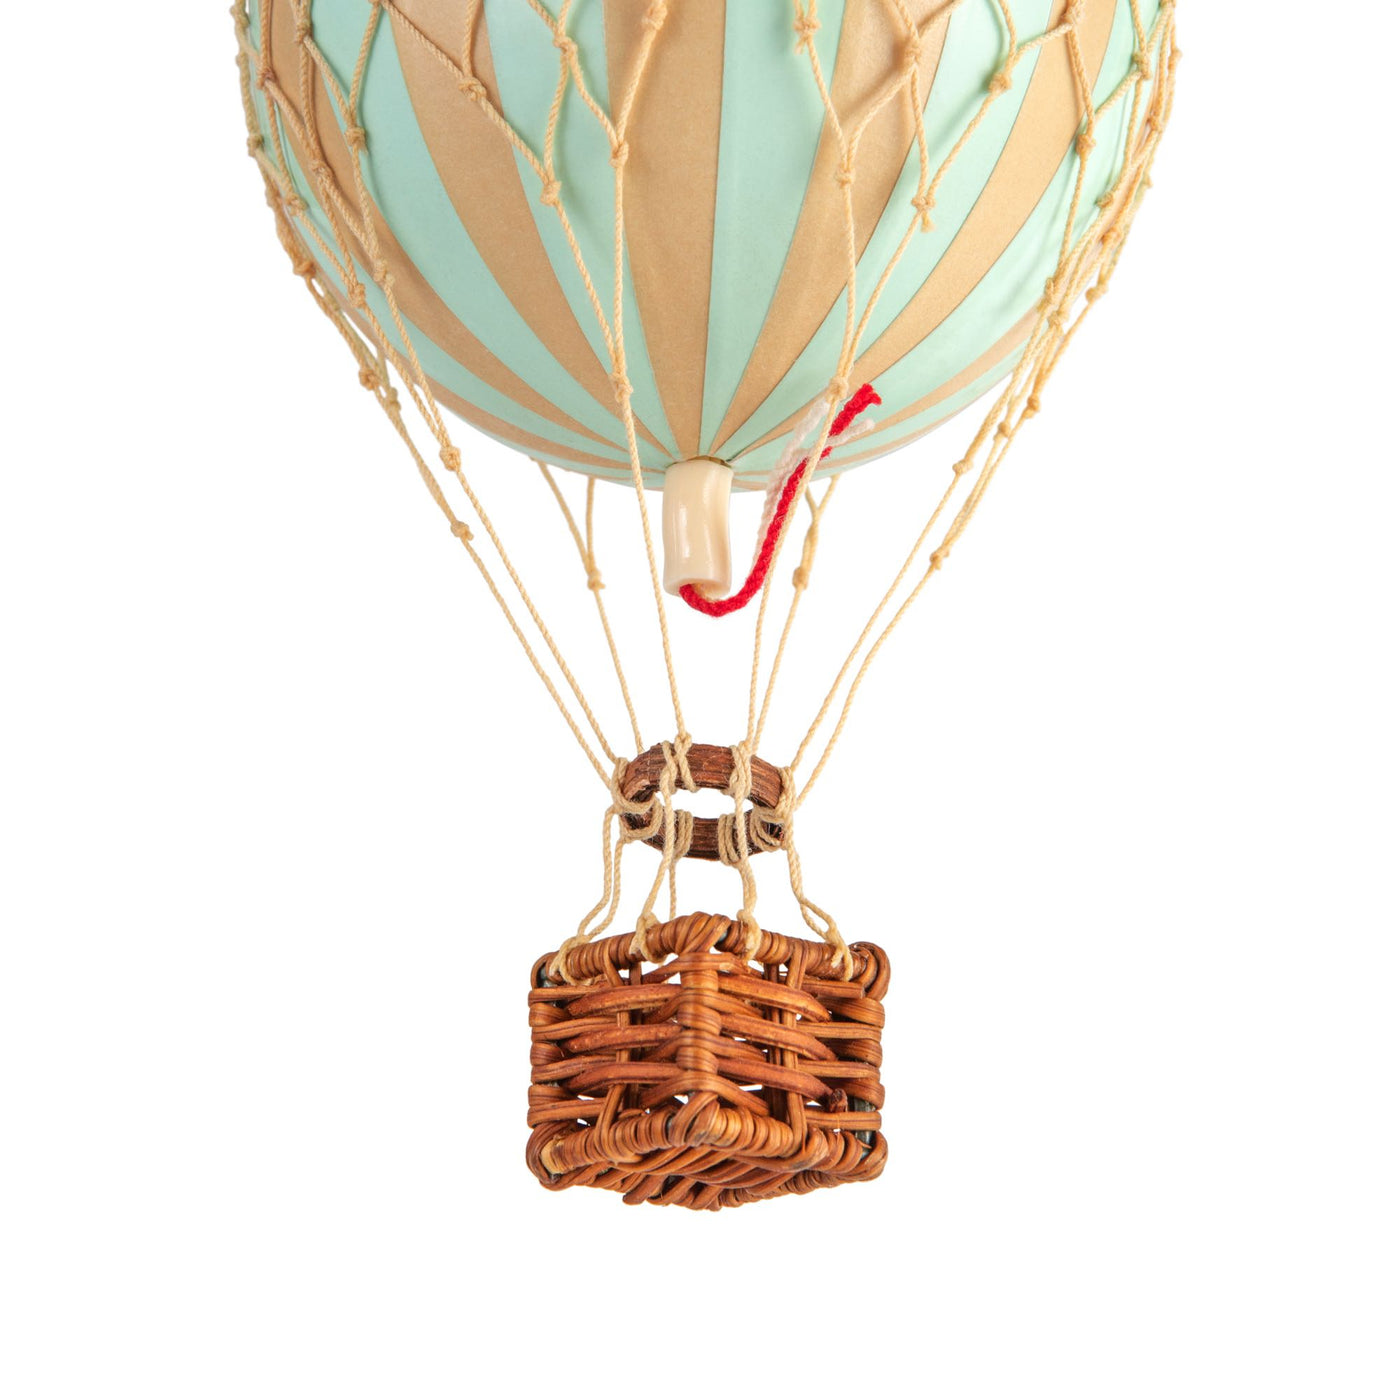 Luftballon Mint, 8,5 cm. Floating The Skies, Authentic Models